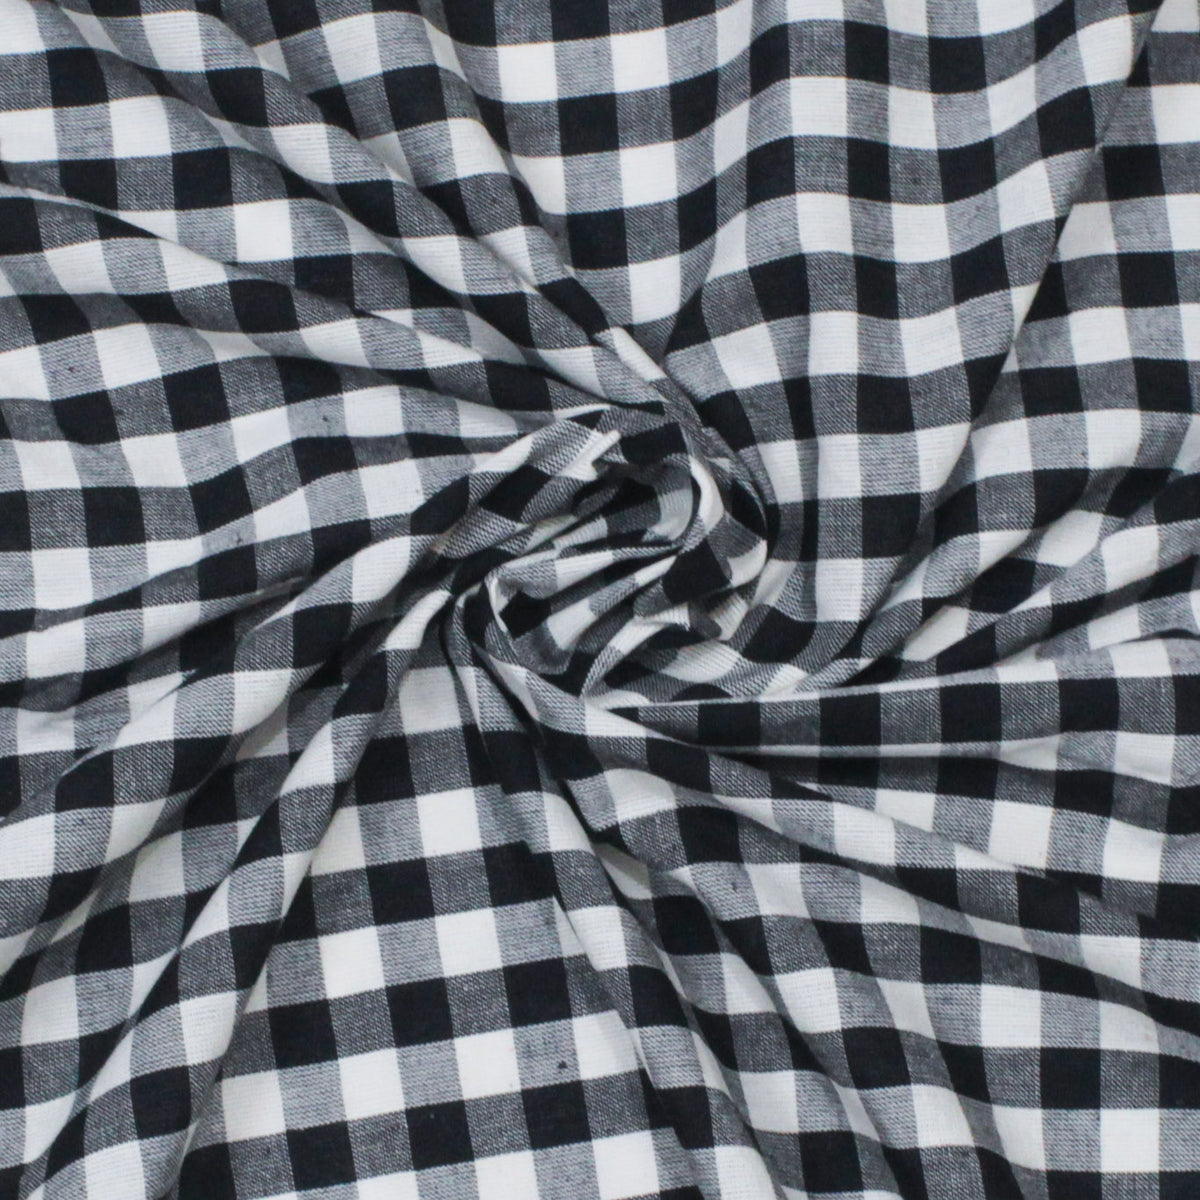 Ikat Hand Woven Cotton Fabric Design - Black & White Gingham Weave